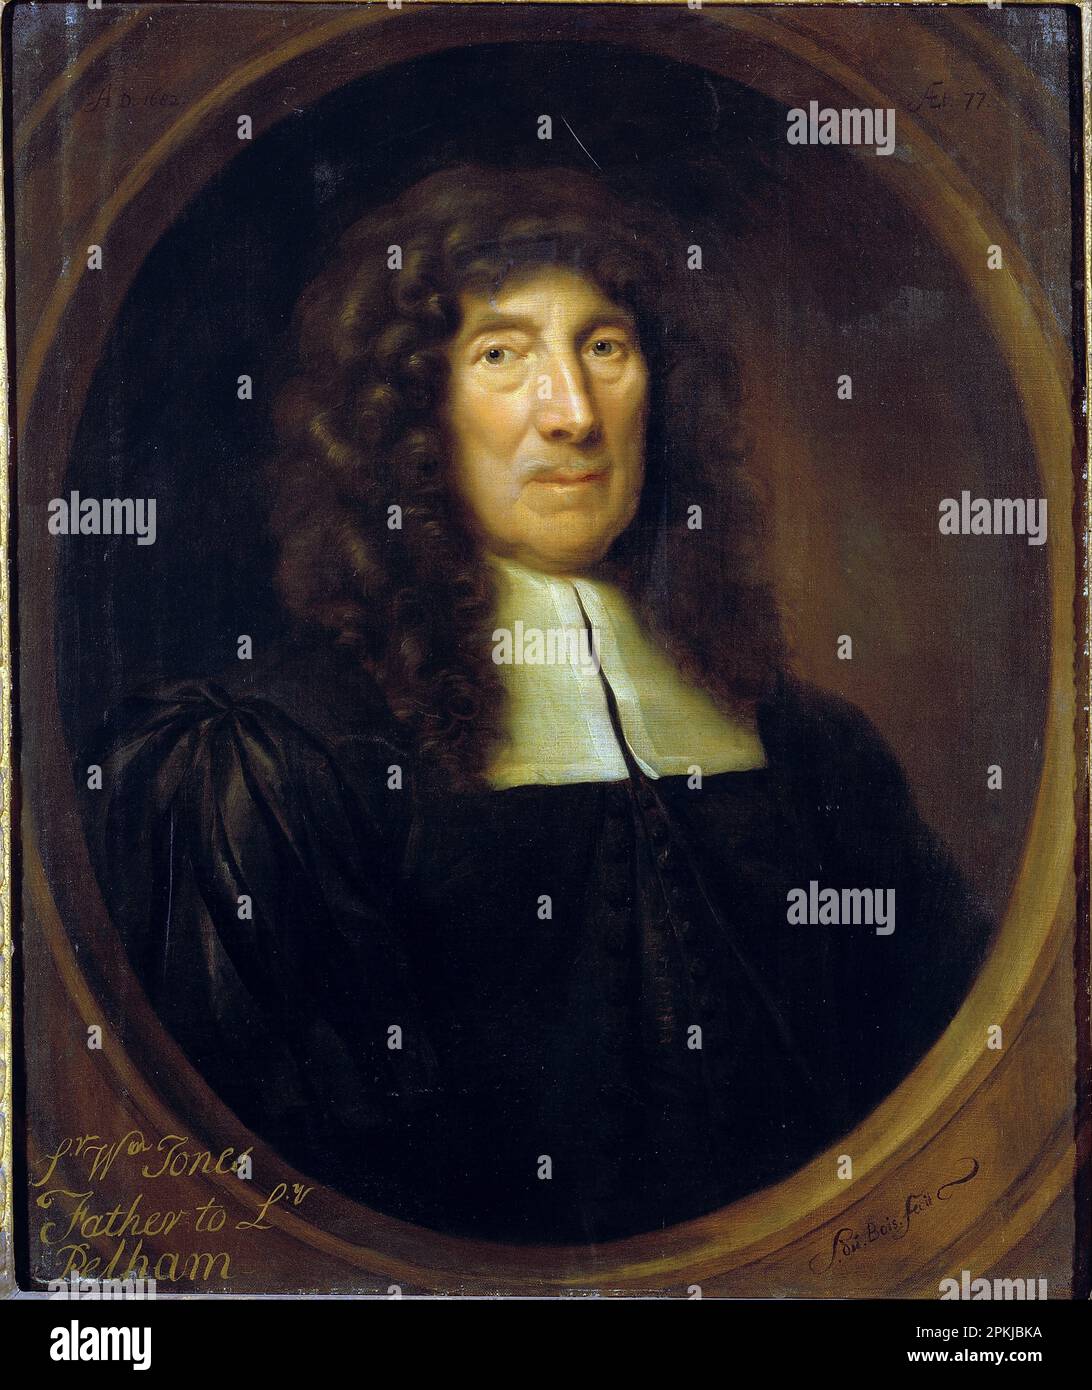 Sir William Jones Kt 1682 by Simon Dubois Stock Photo